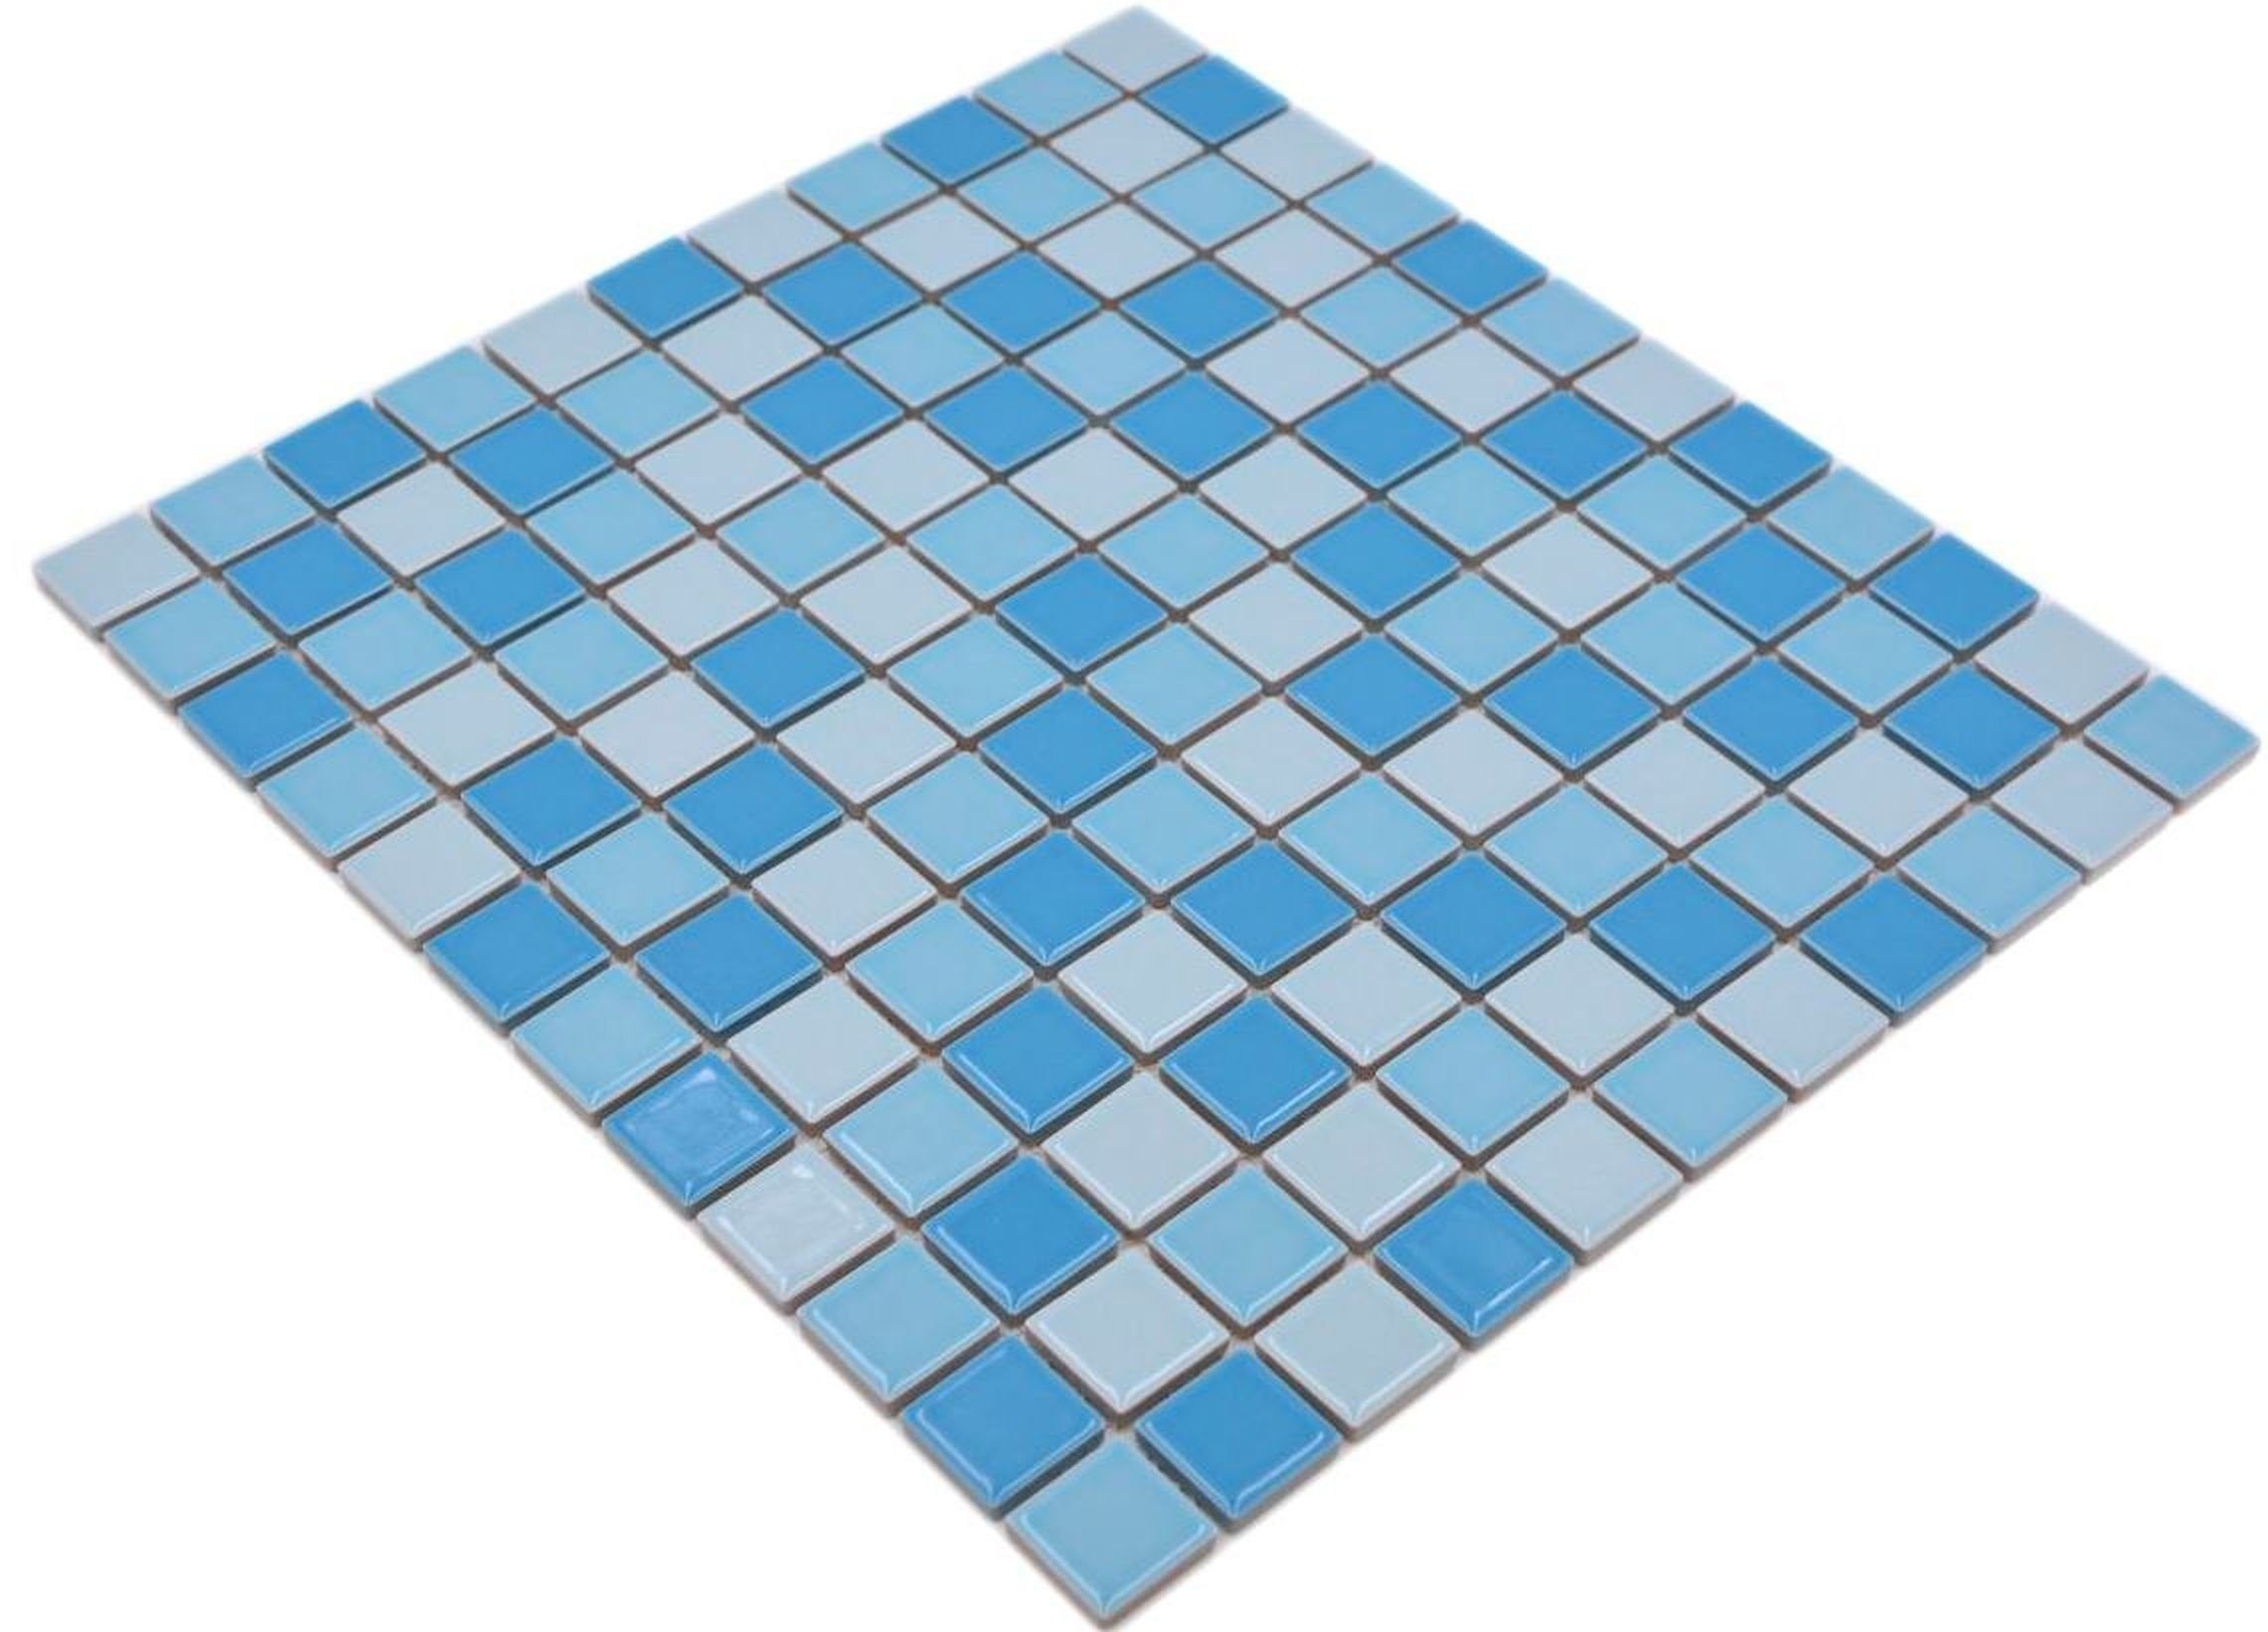 Schwimmbad Keramik blau Duschwand Mosani glänzend Mosaikfliesen Mosaikfliese Mosaik mix